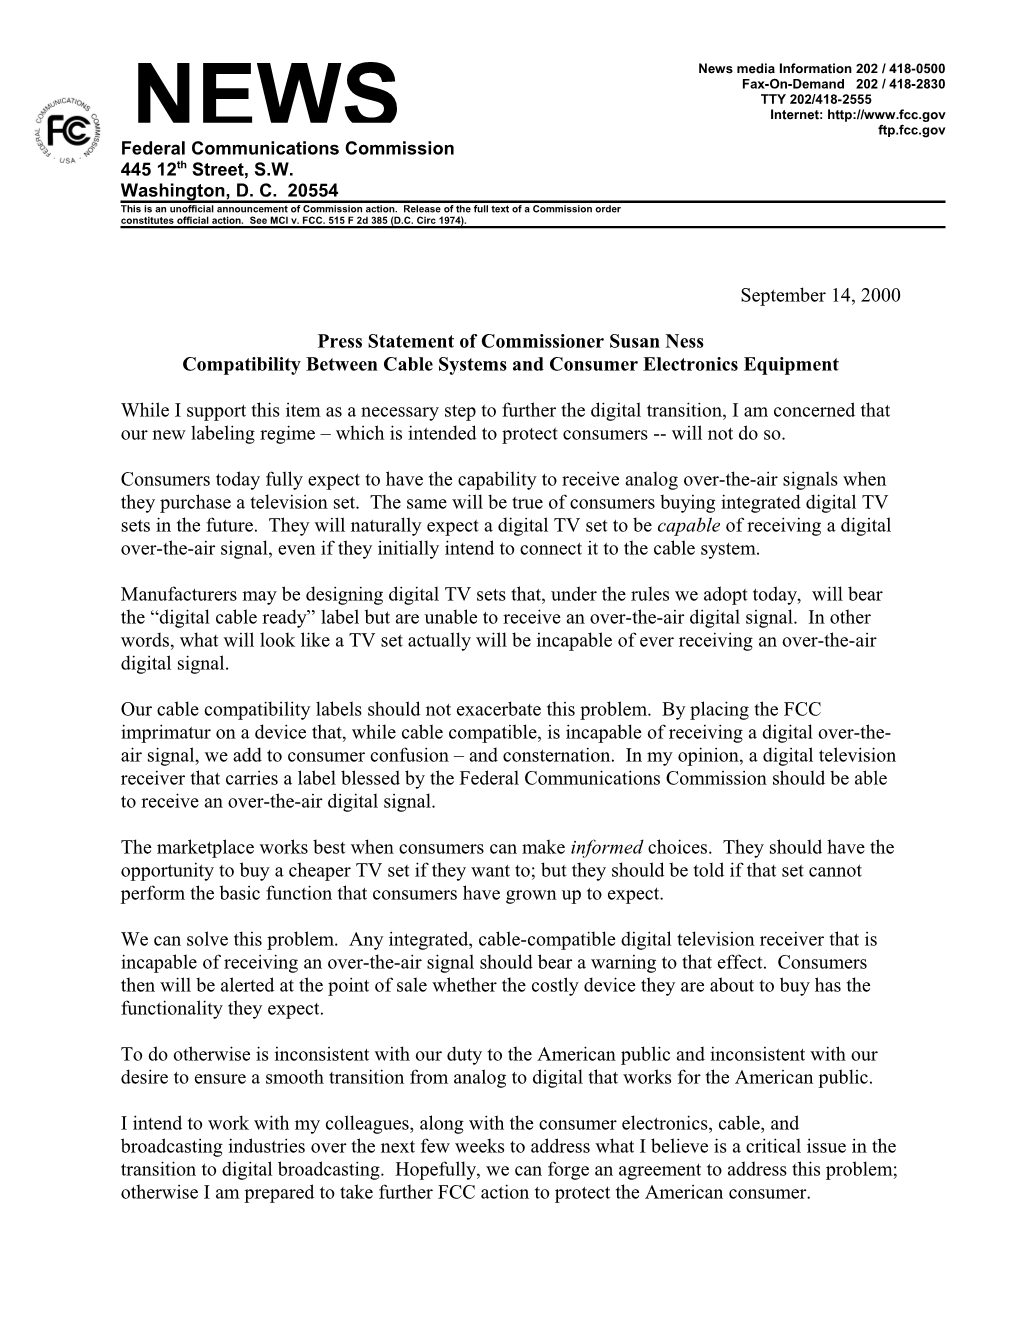 Press Statement of Commissioner Susan Ness